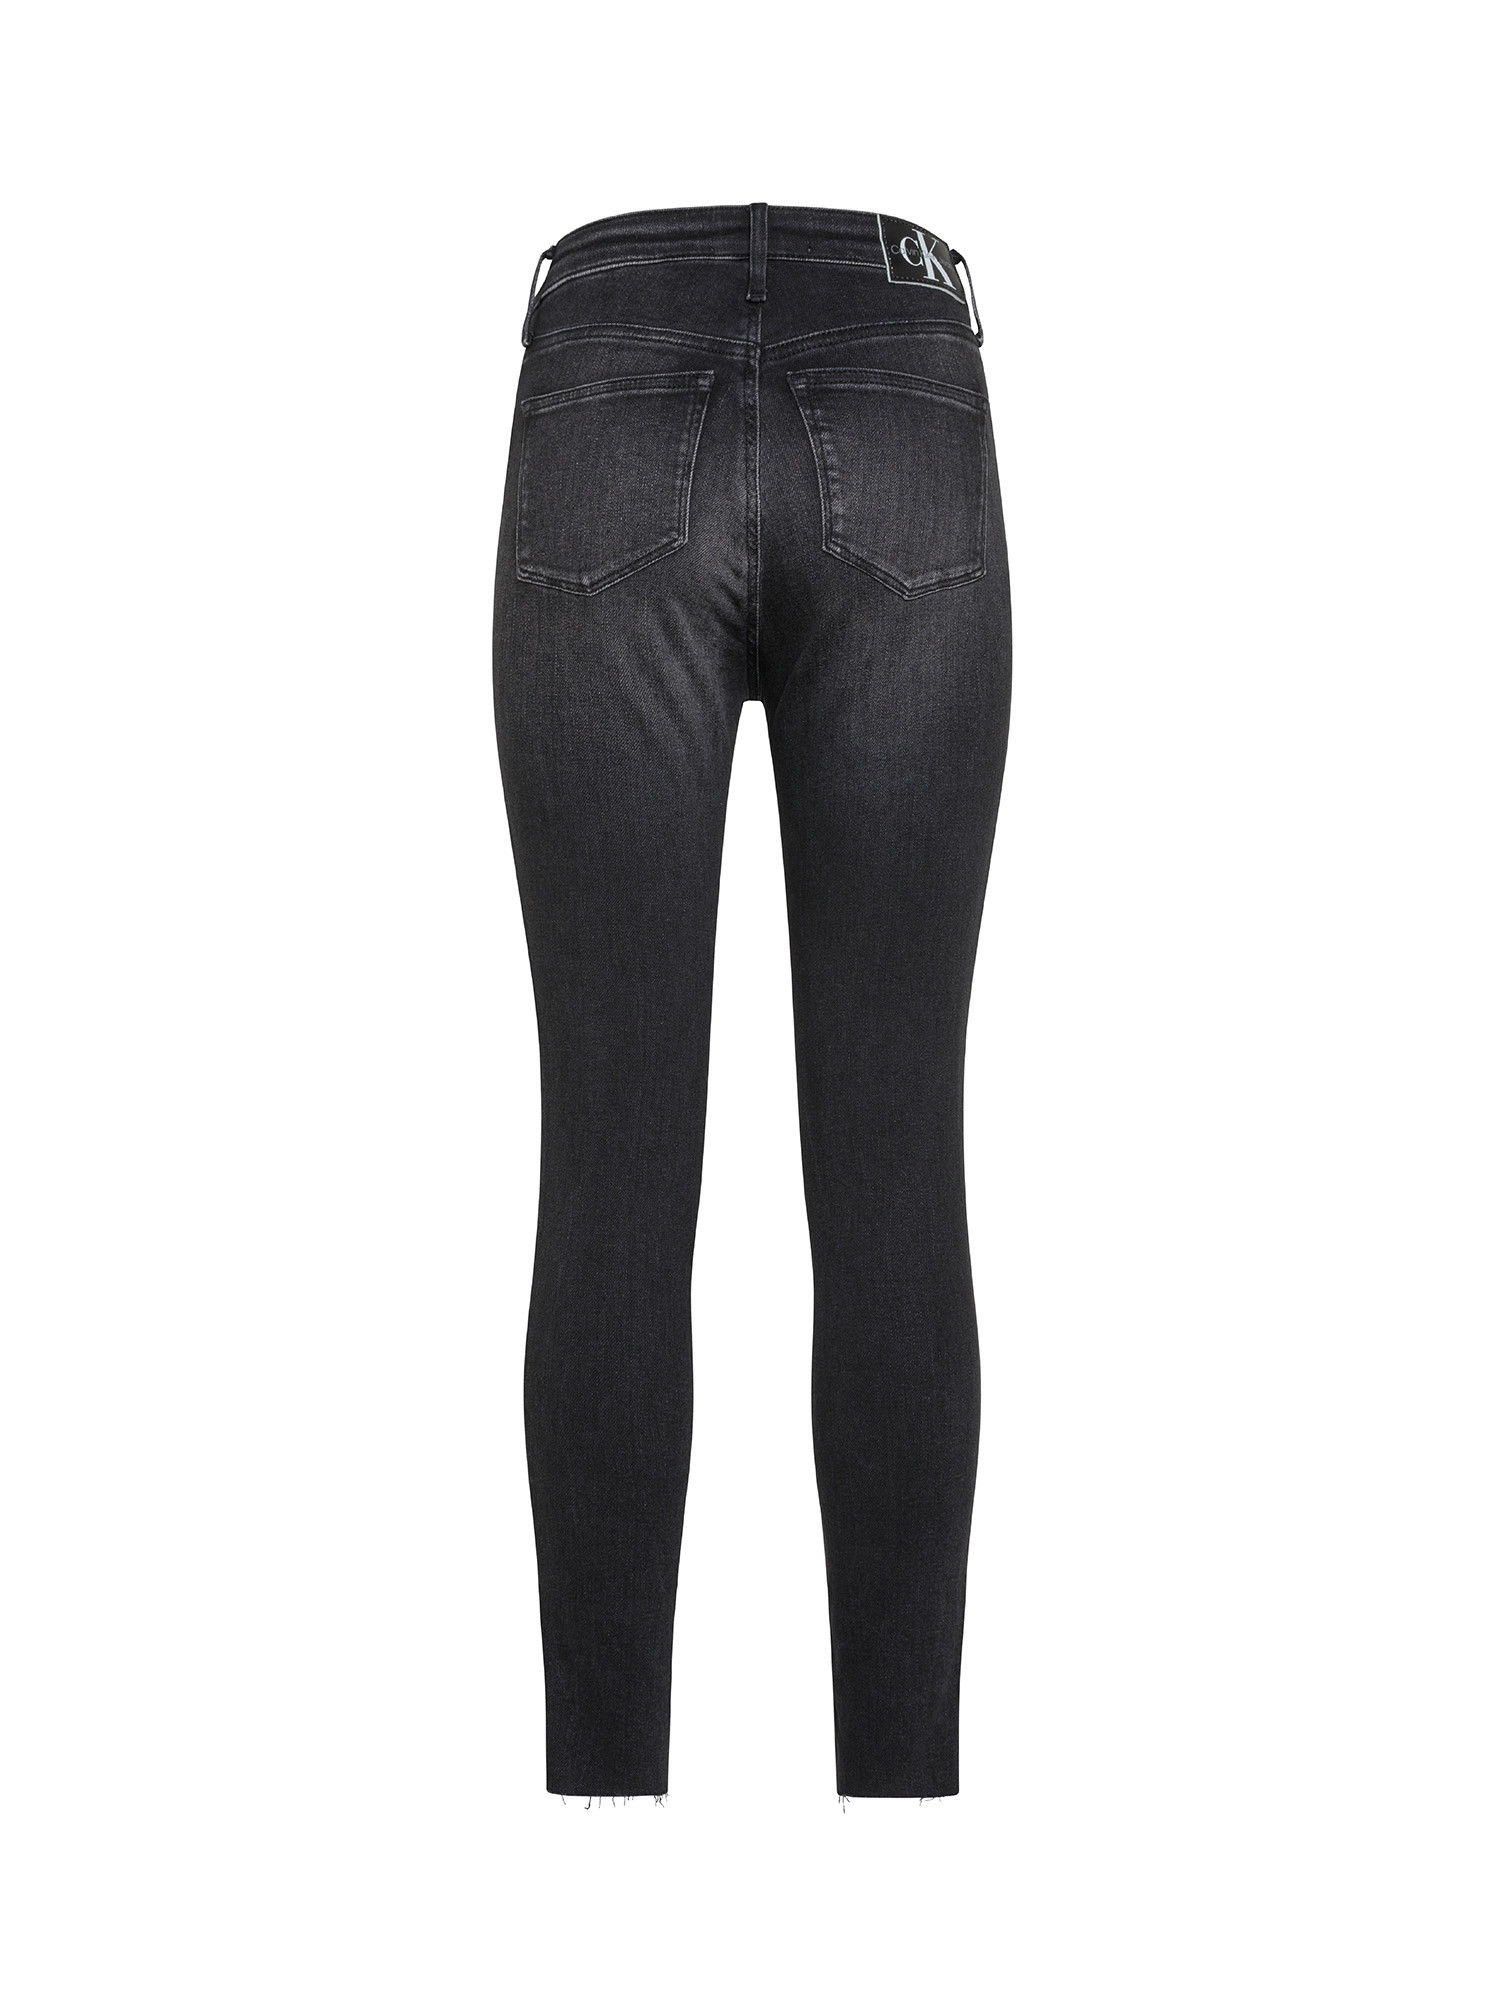 Calvin Klein Jeans - Jeans cinque tasche super skinny, Nero, large image number 1